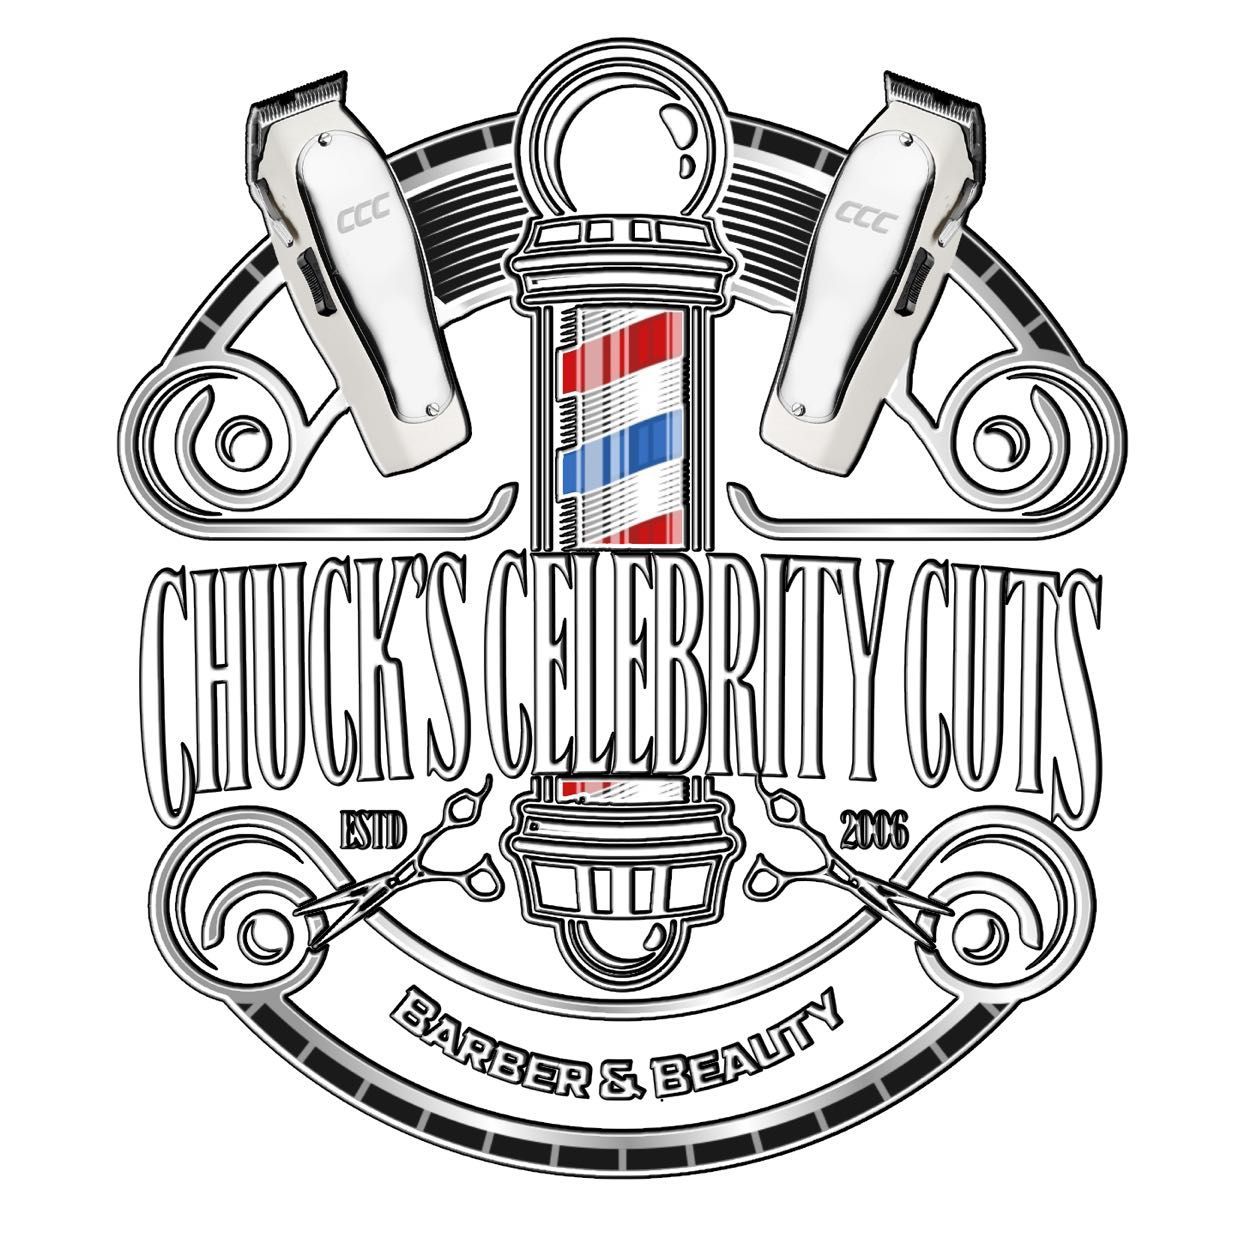 Chuck The Barber @Chuck’s Celebrity Cuts, 3203 Washington Rd suite B, Kenosha, 53144